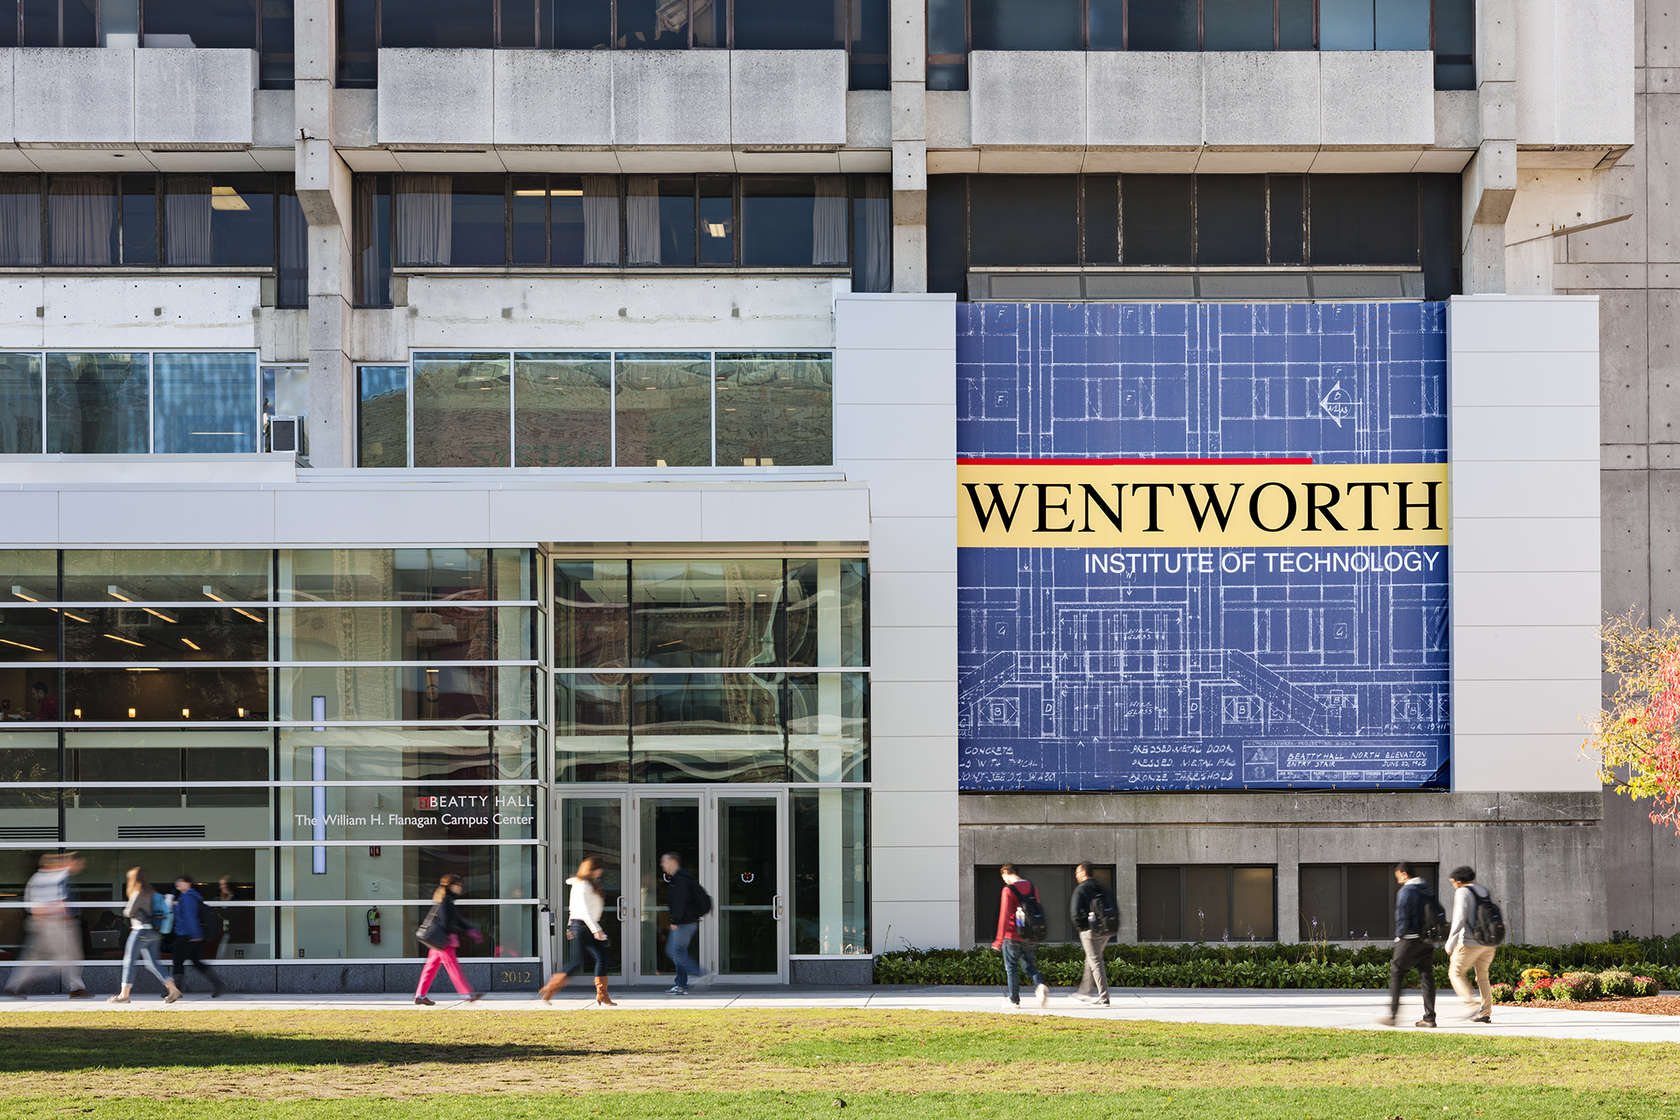 Wentworth Institute of Technology, Flanagan Campus Center at Beatty